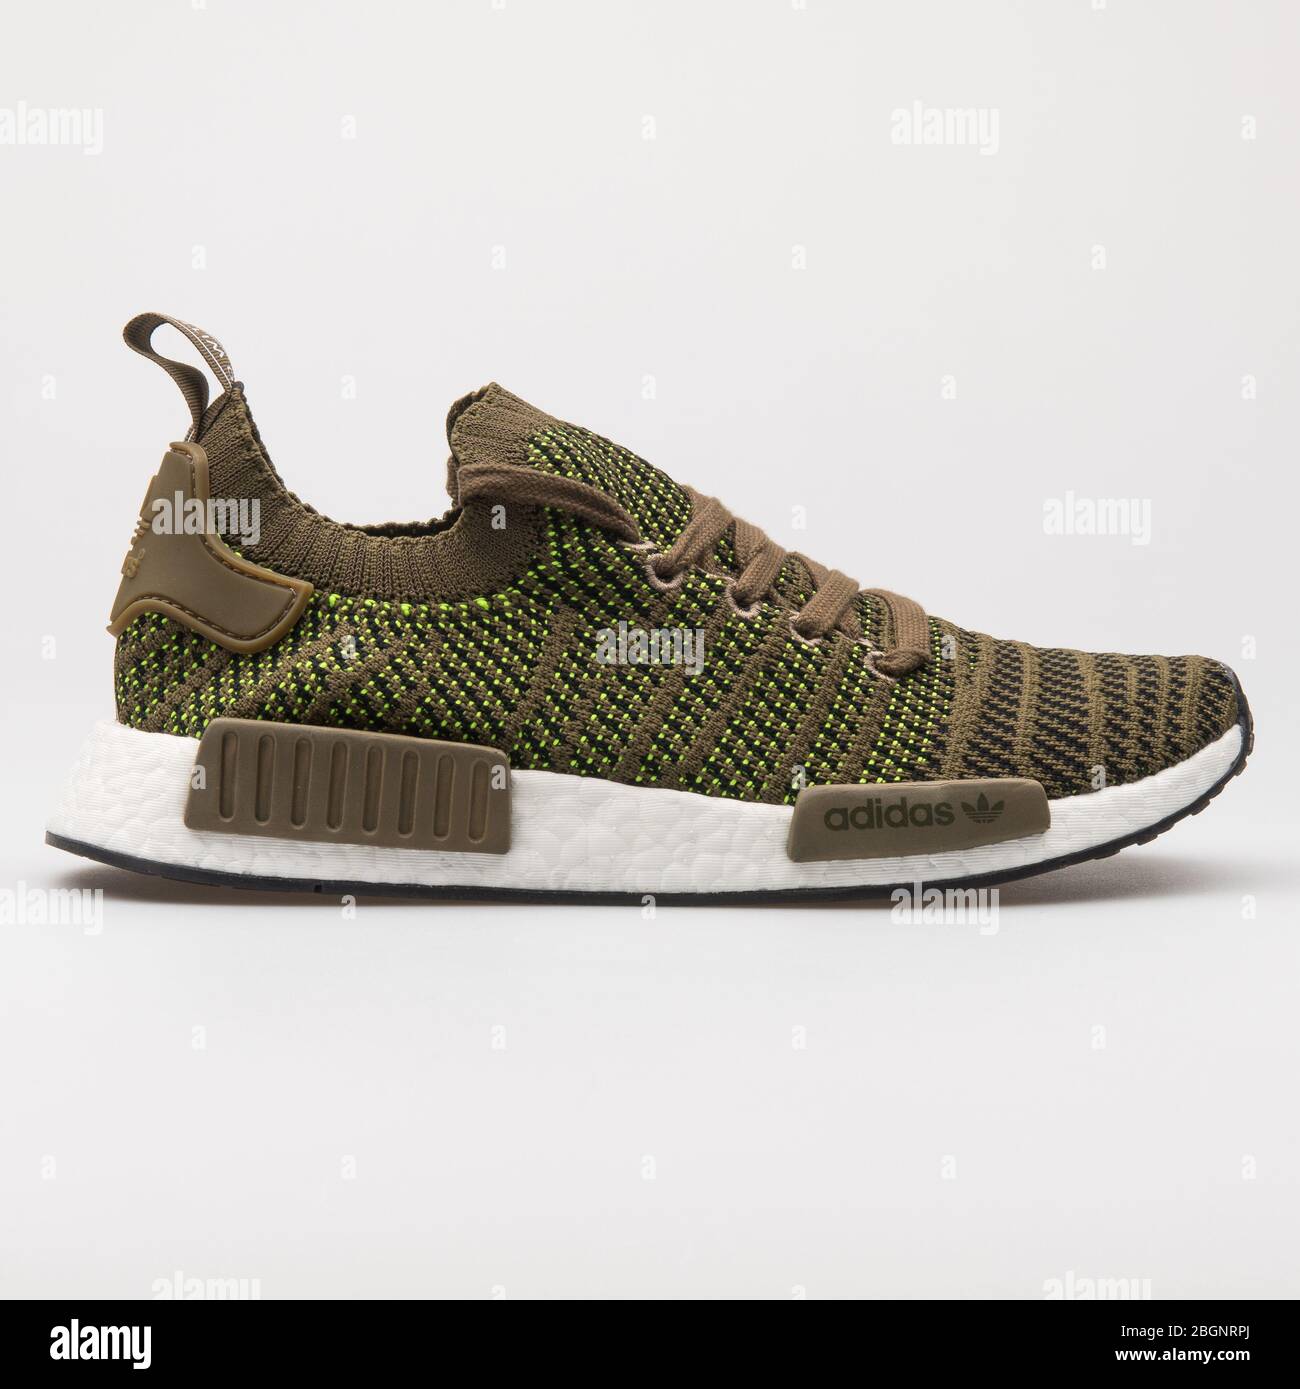 adidas nmd r1 military green